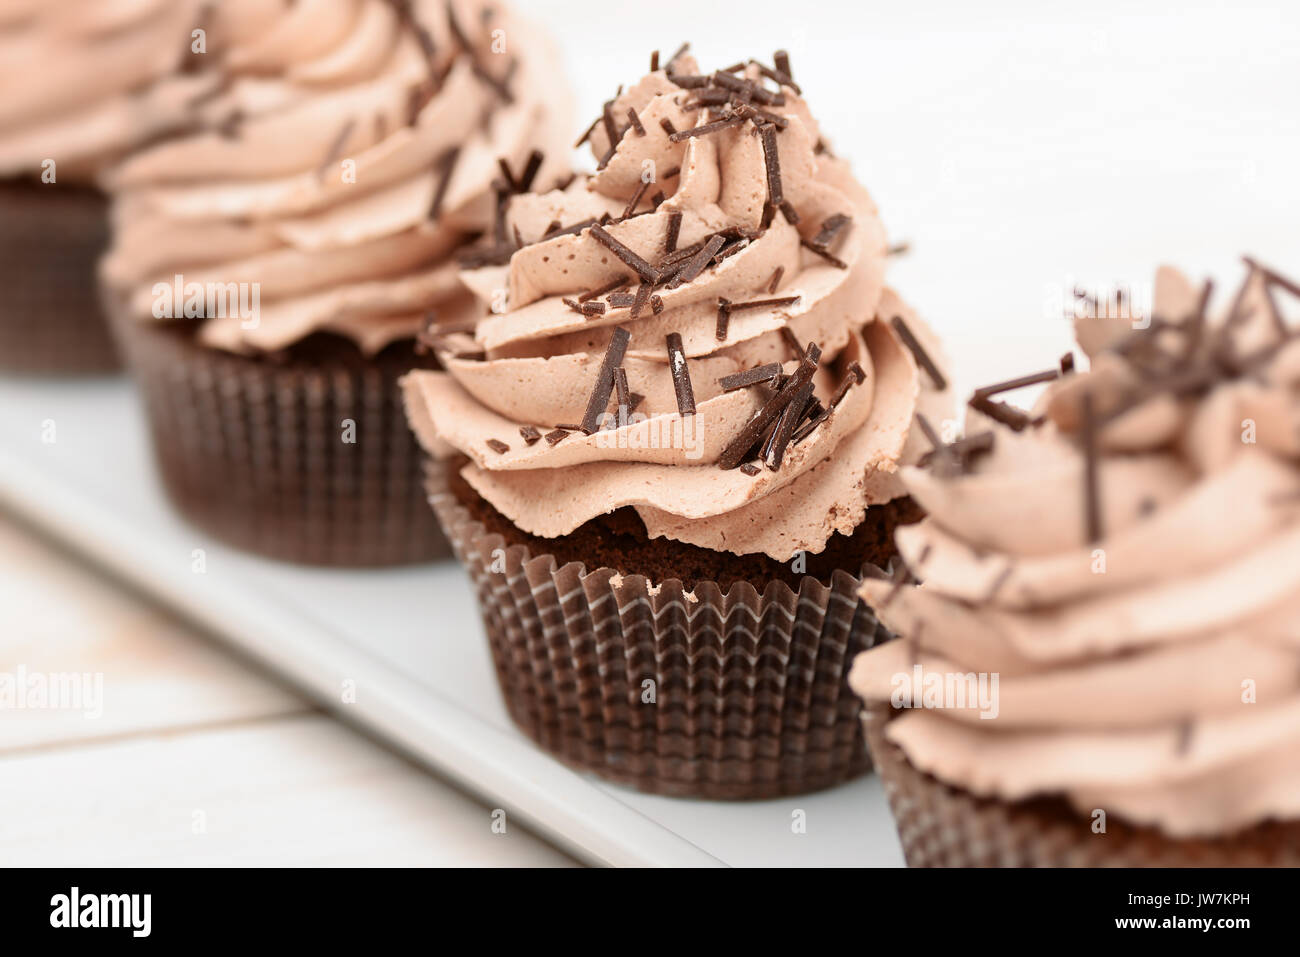 Close up of chocolate cupcakes Stock Photo